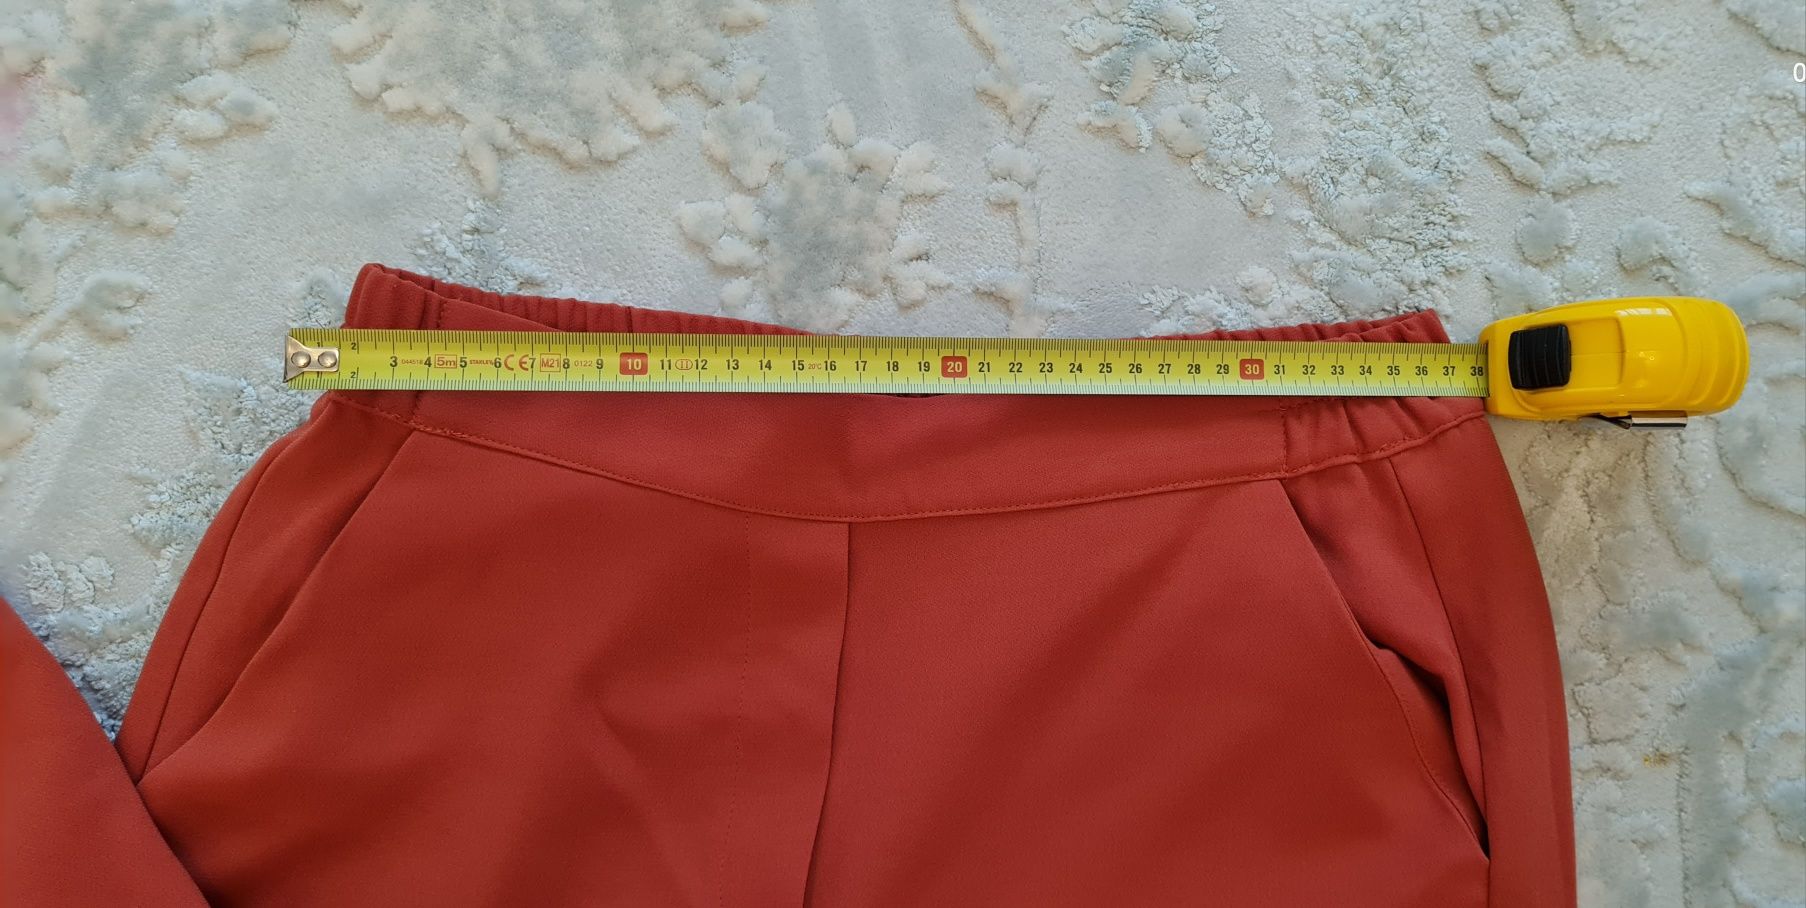 Pantaloni mango caramizii format 3/4 m38 ok si pt gravide